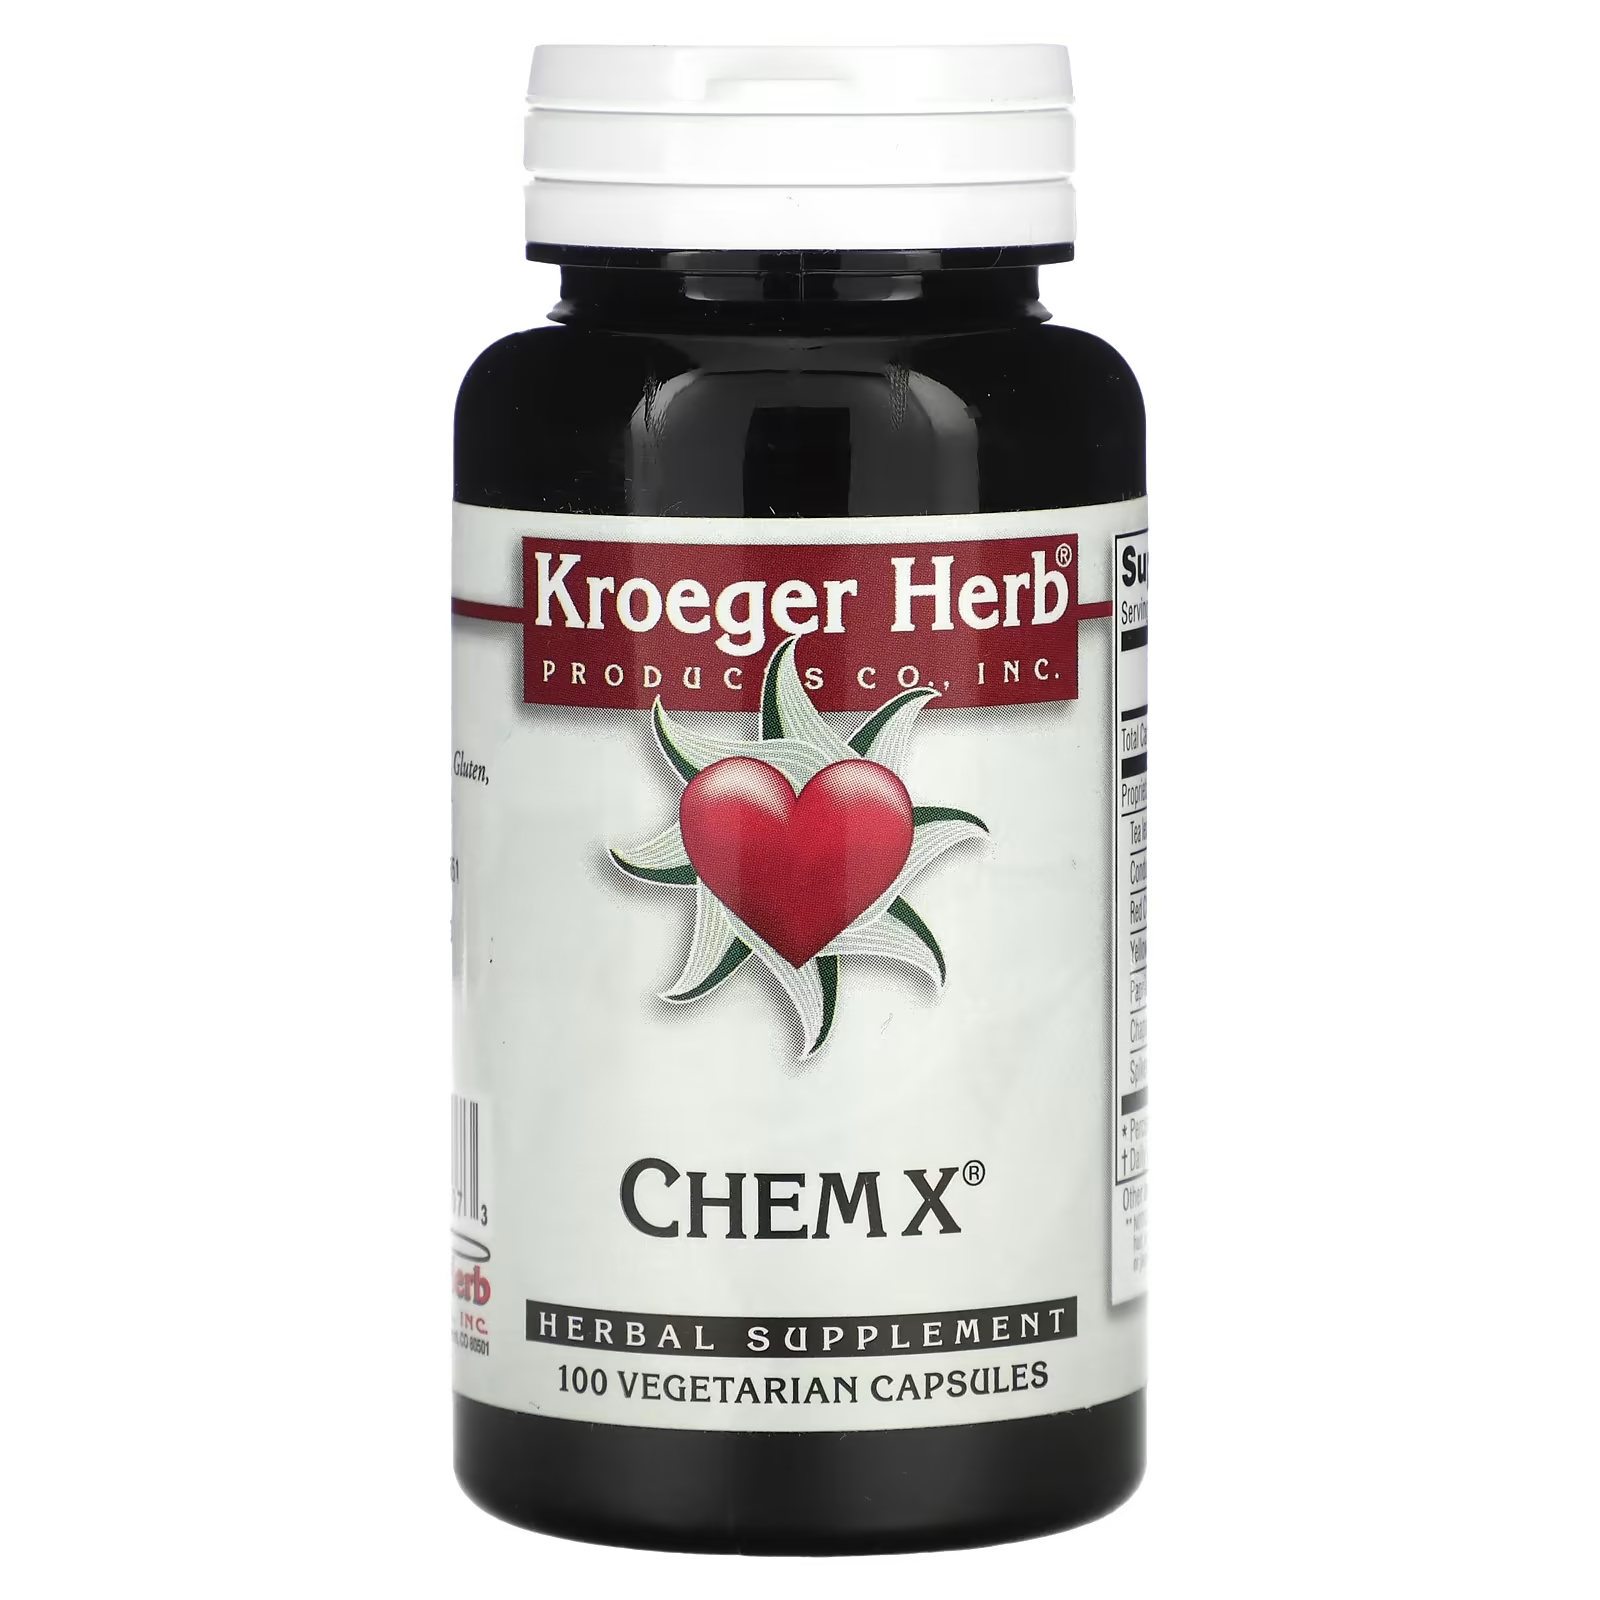 Растительная добавка Kroeger Herb Co Chem X, 100 капсул растительная добавка kroeger herb co балансировщик полярности 100 капсул